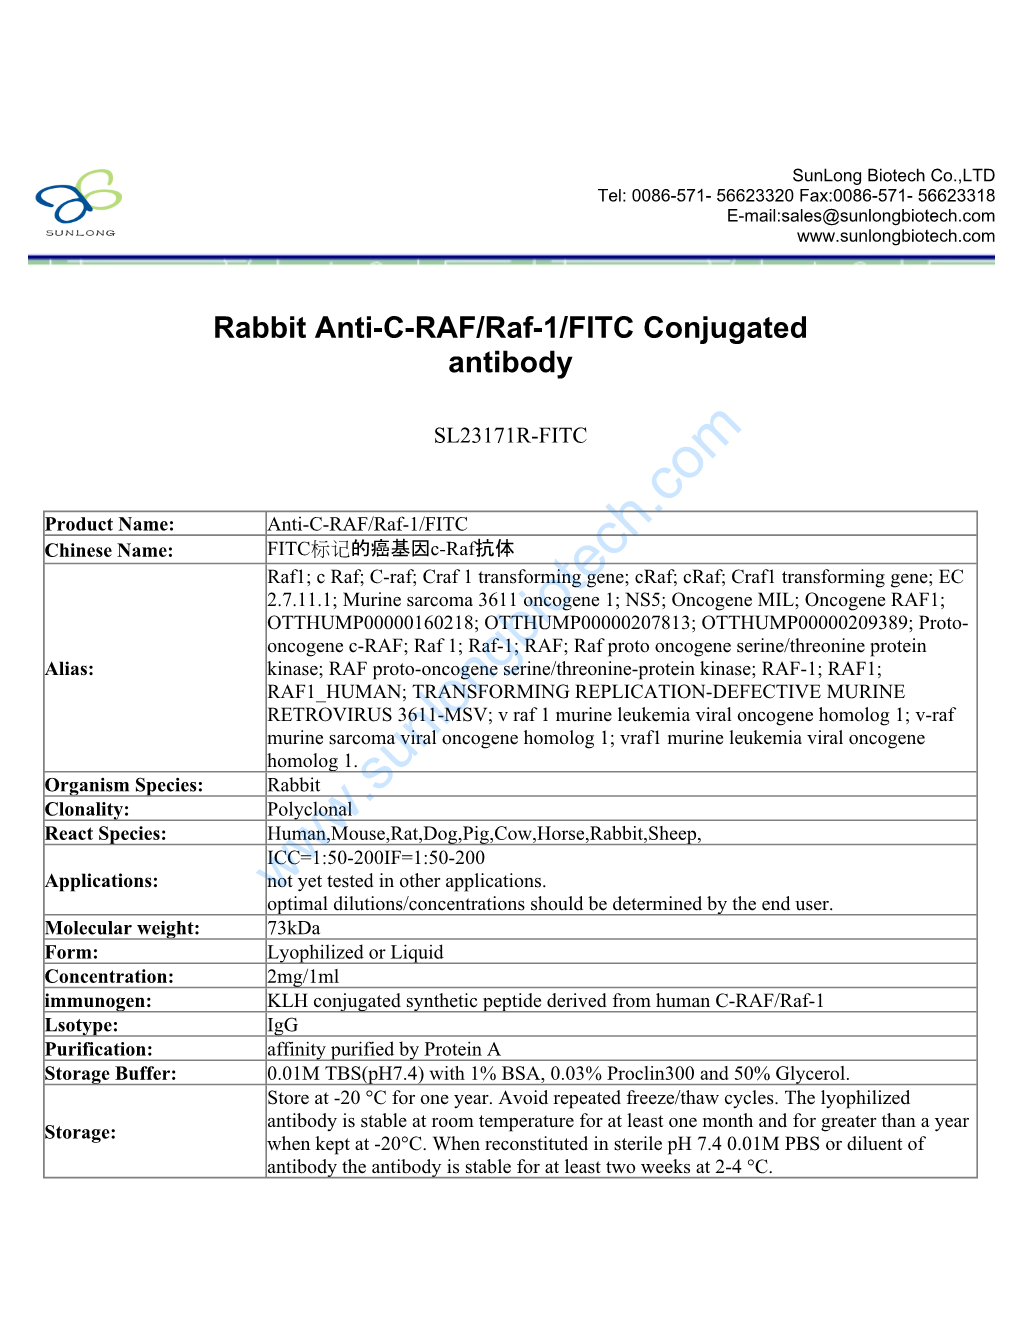 Rabbit Anti-C-RAF/Raf-1/FITC Conjugated Antibody